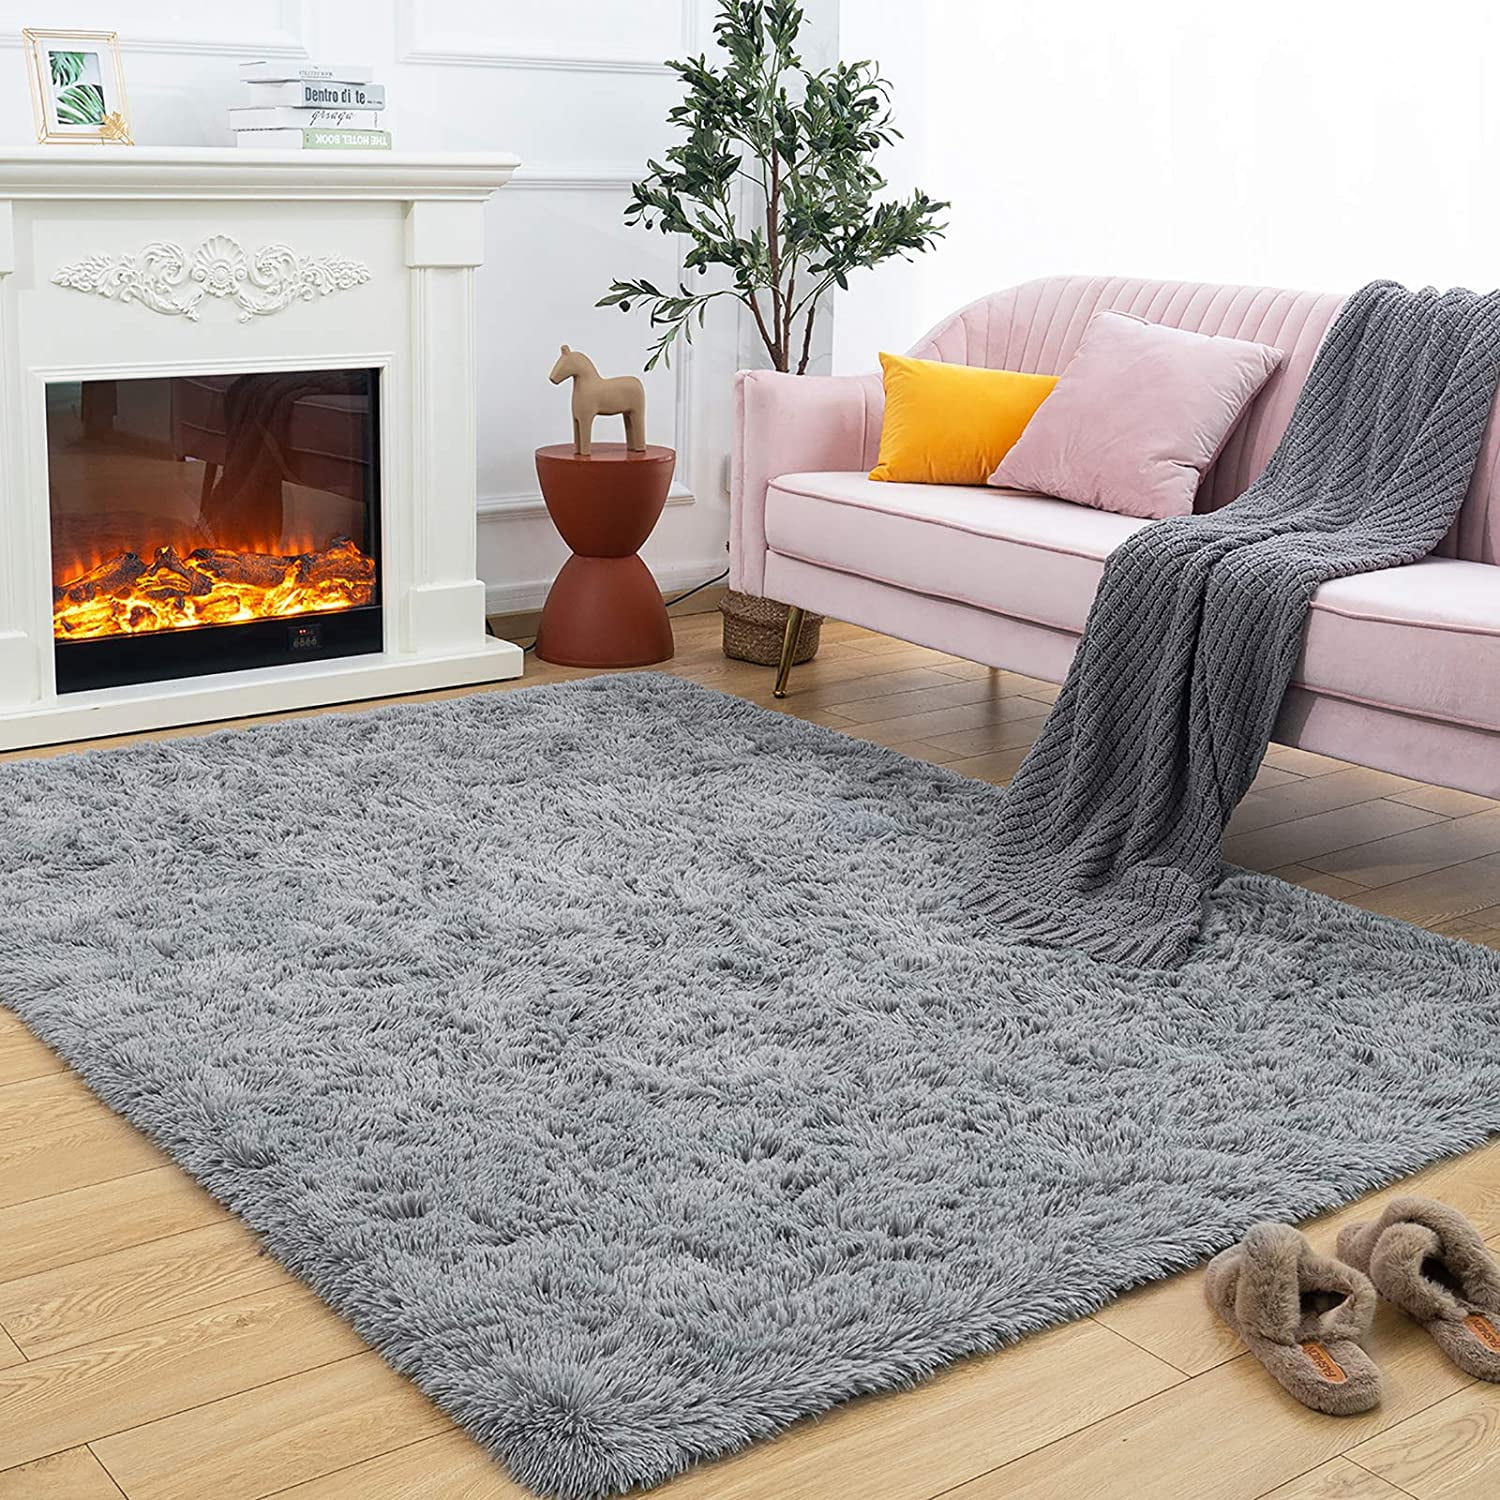 Floor Mat Heart Shaped Fluffy Rugs Shaggy Hairy Carpet Pad Home Decor Hot 